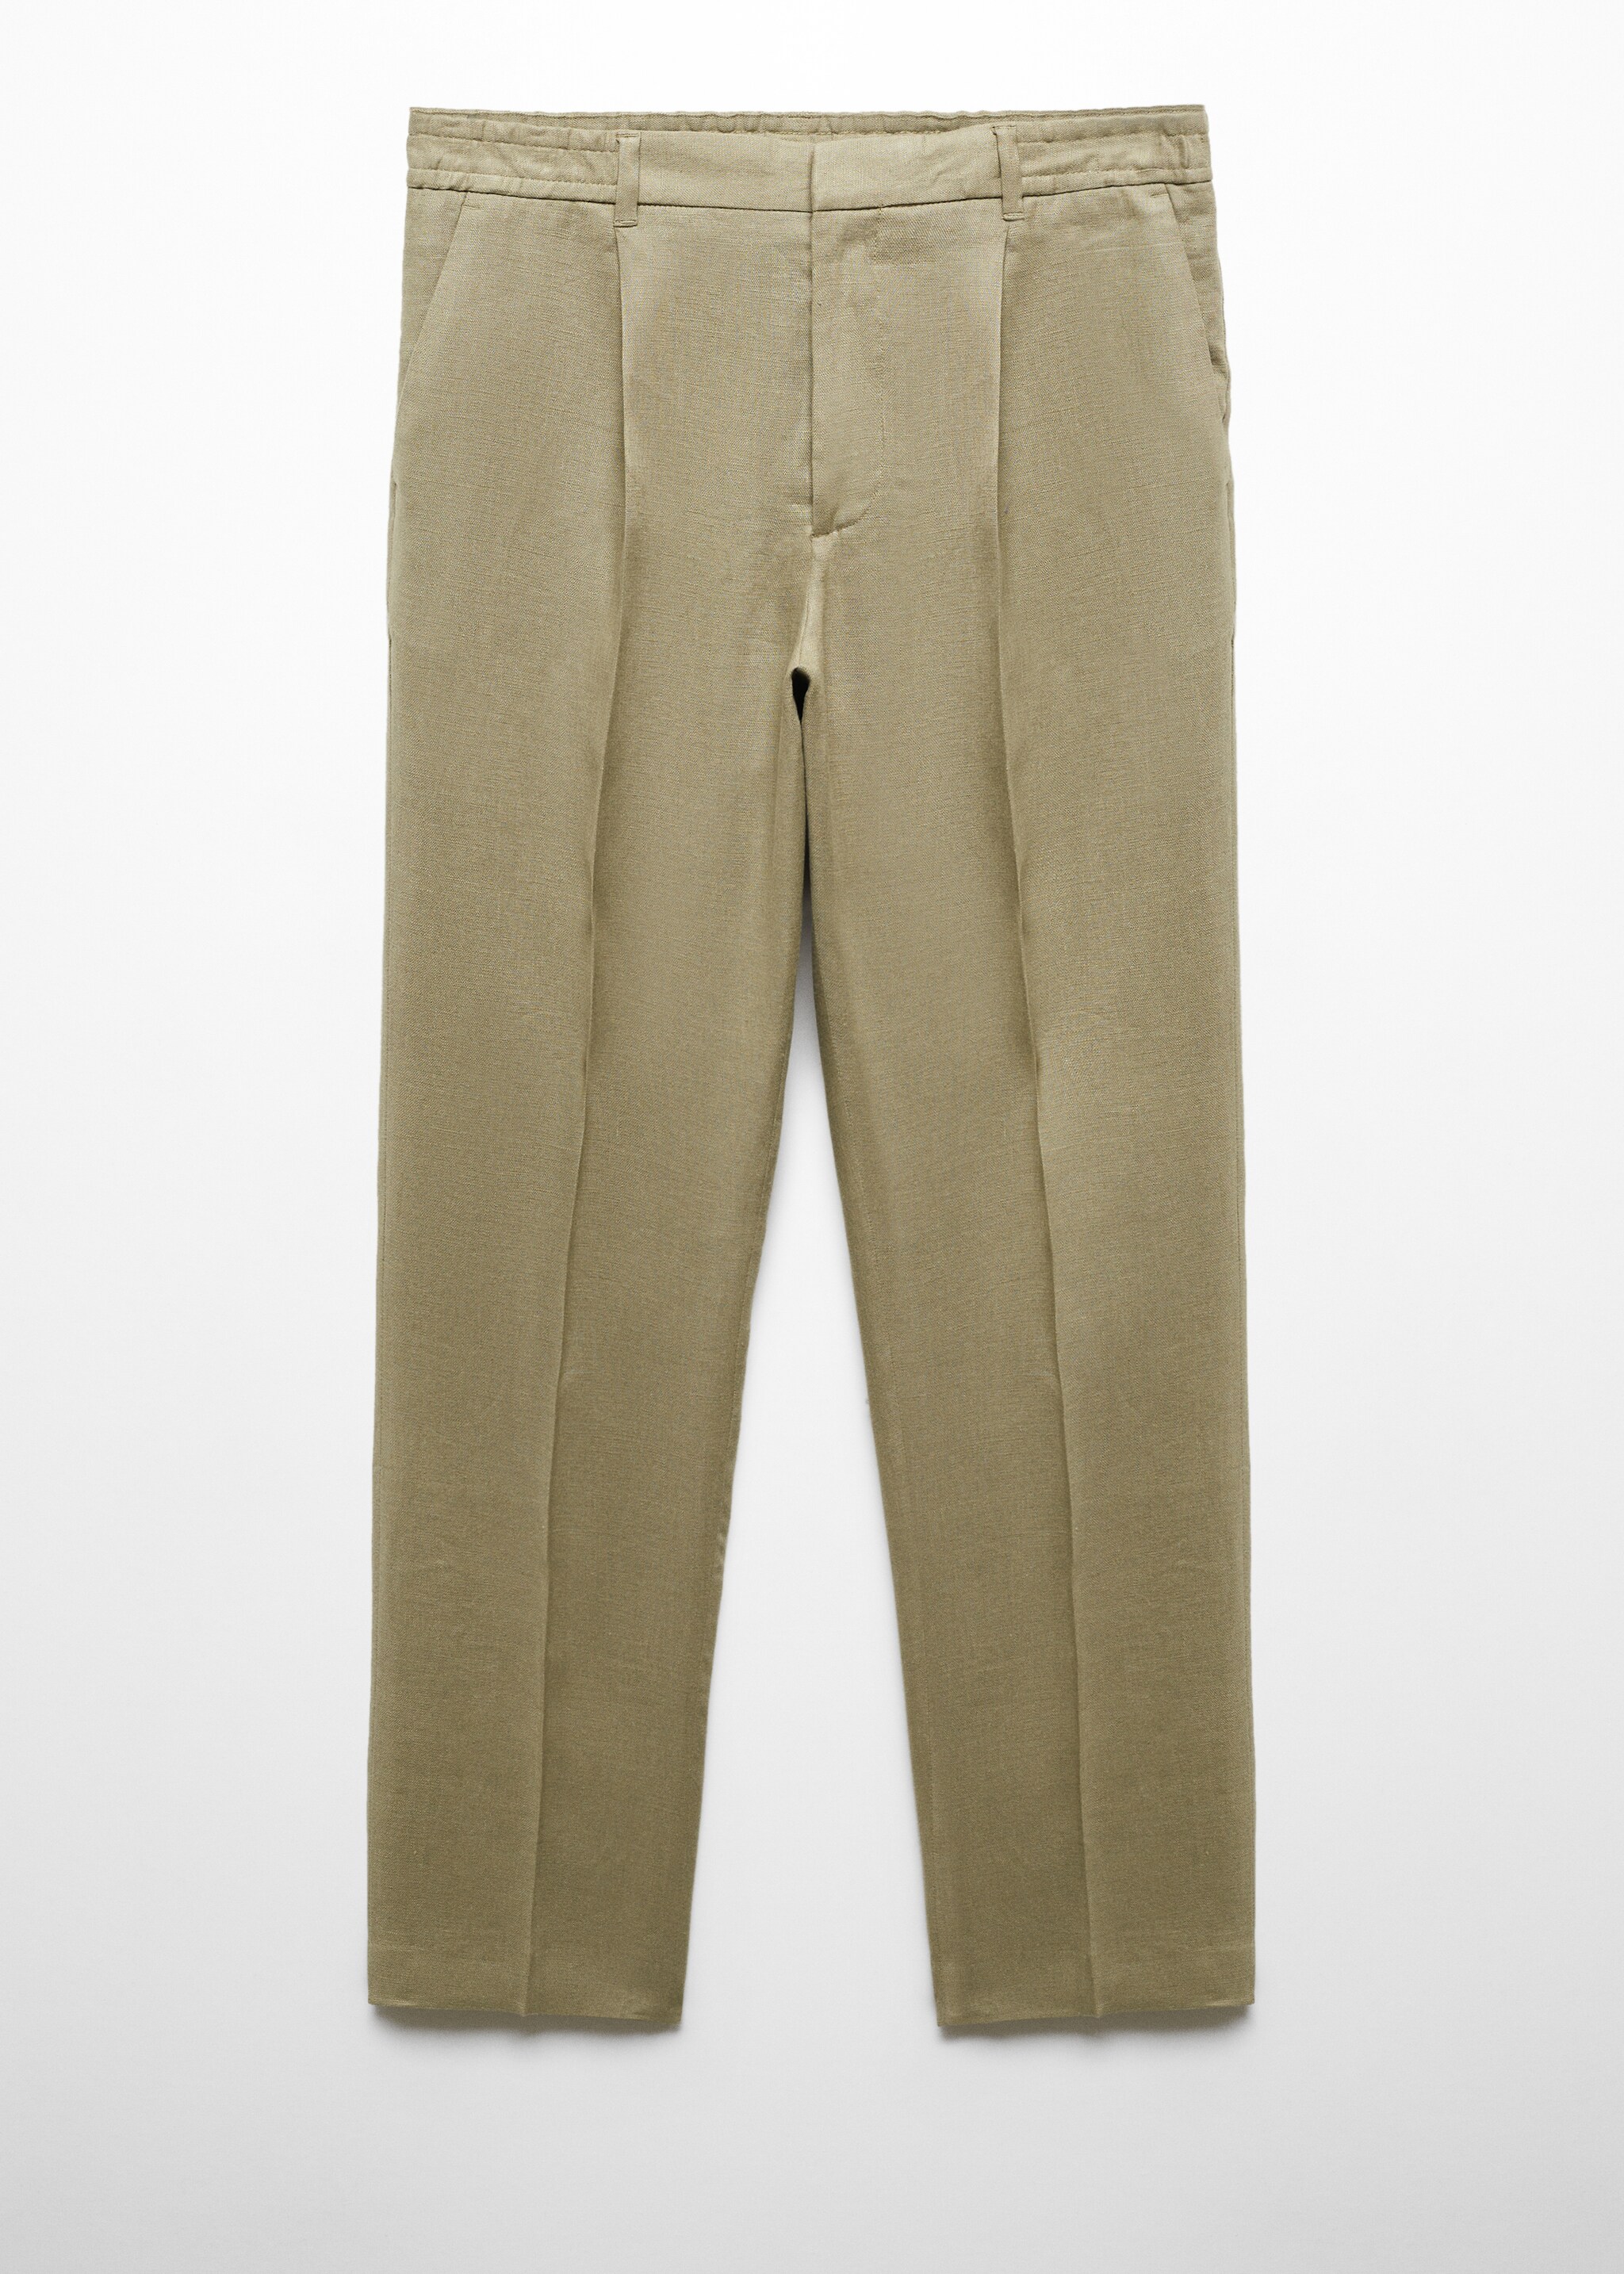 Pantalón 100% lino regular fit - Artículo sin modelo